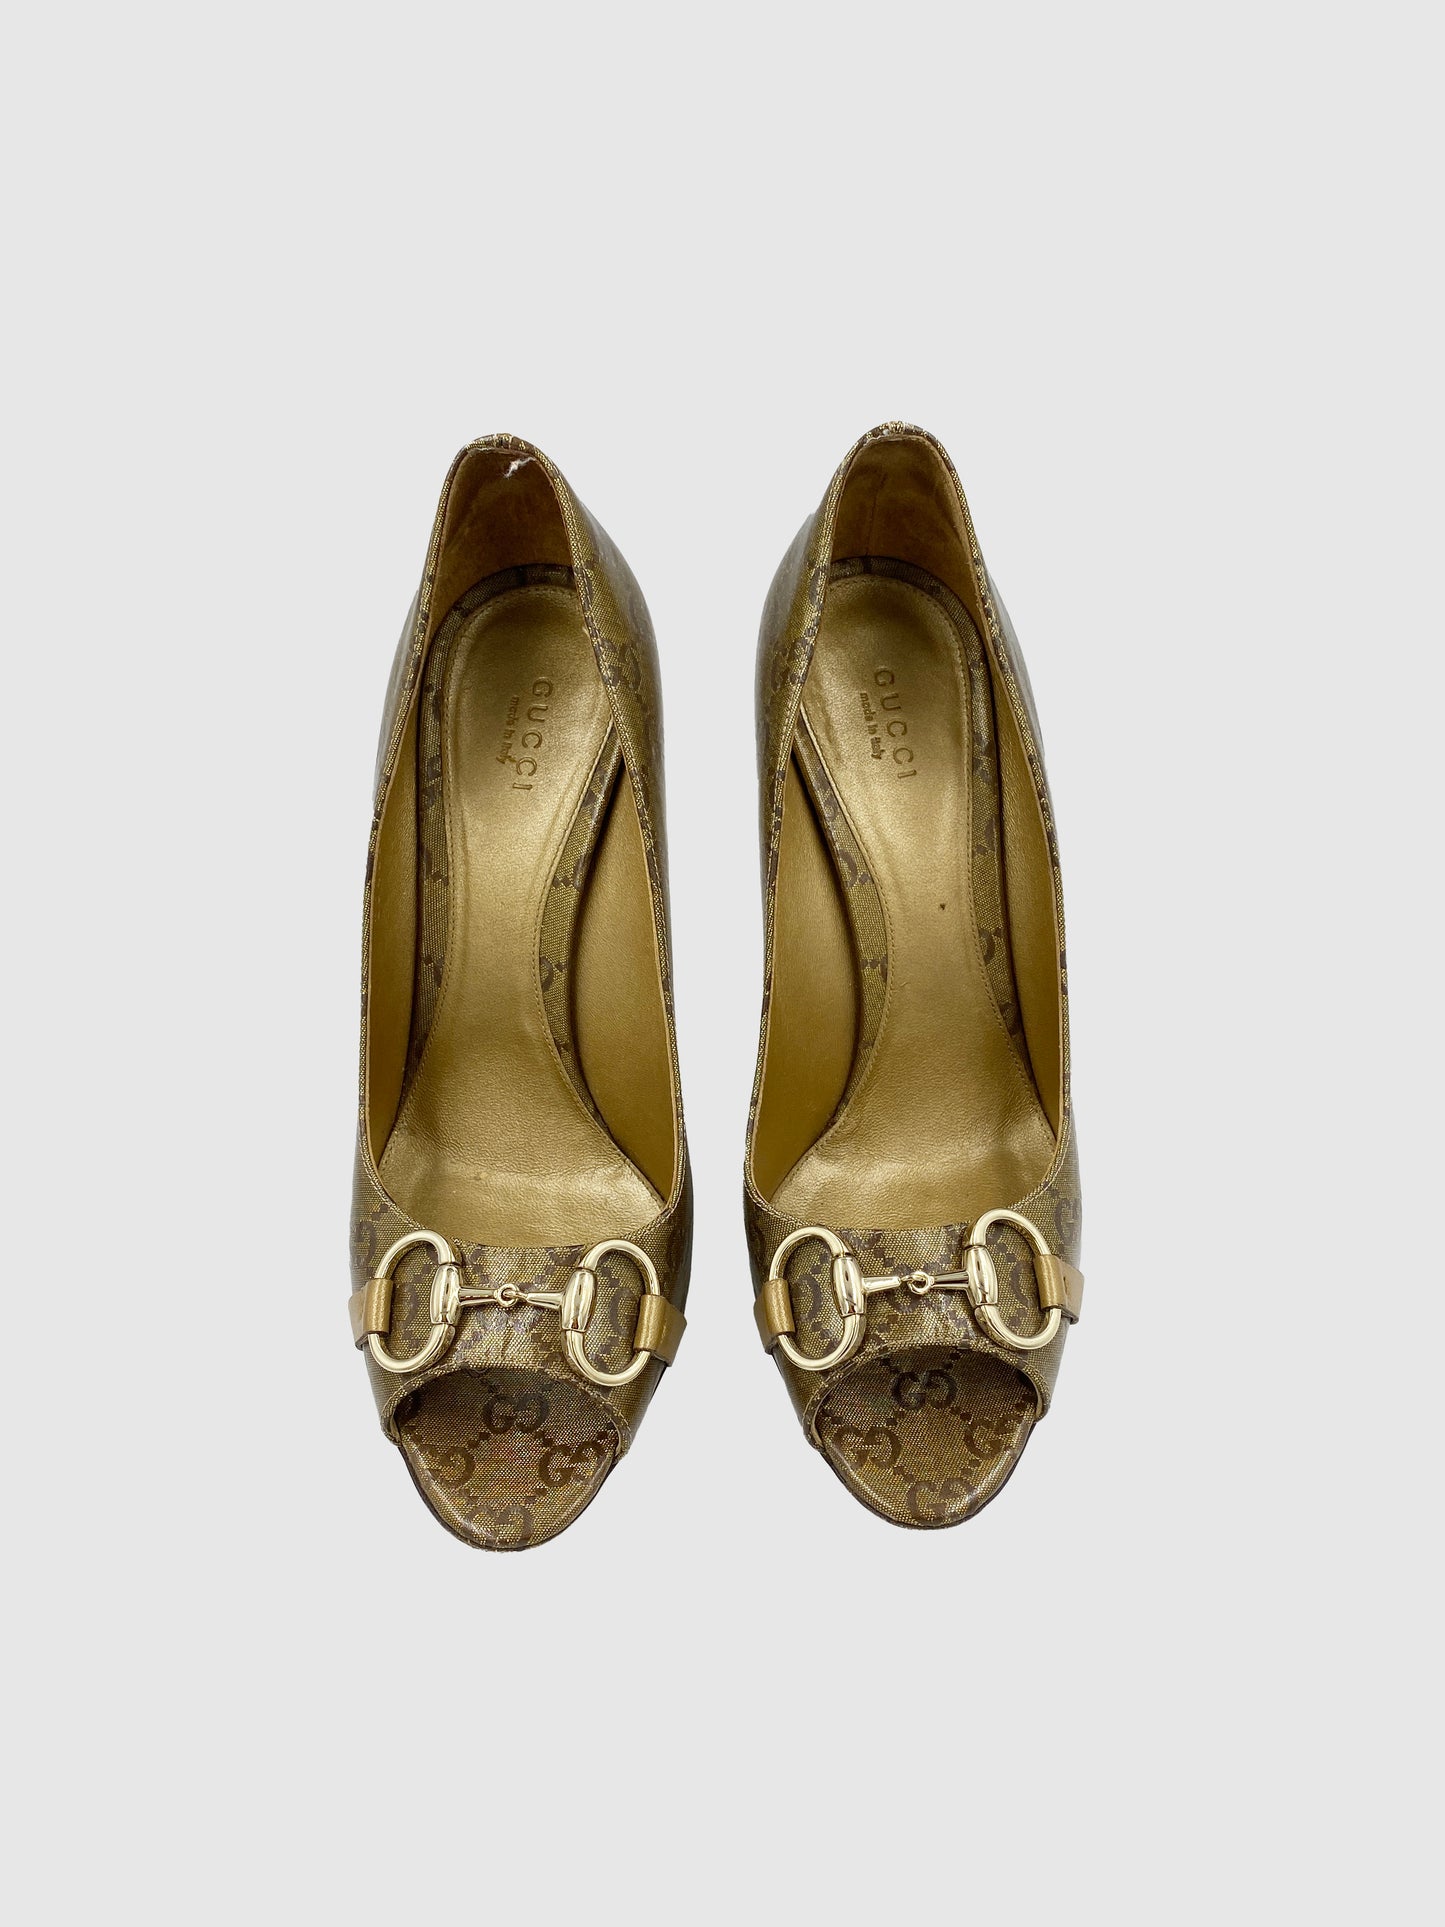 Gucci Gold Monogram Peep Toe Heels - Size 9